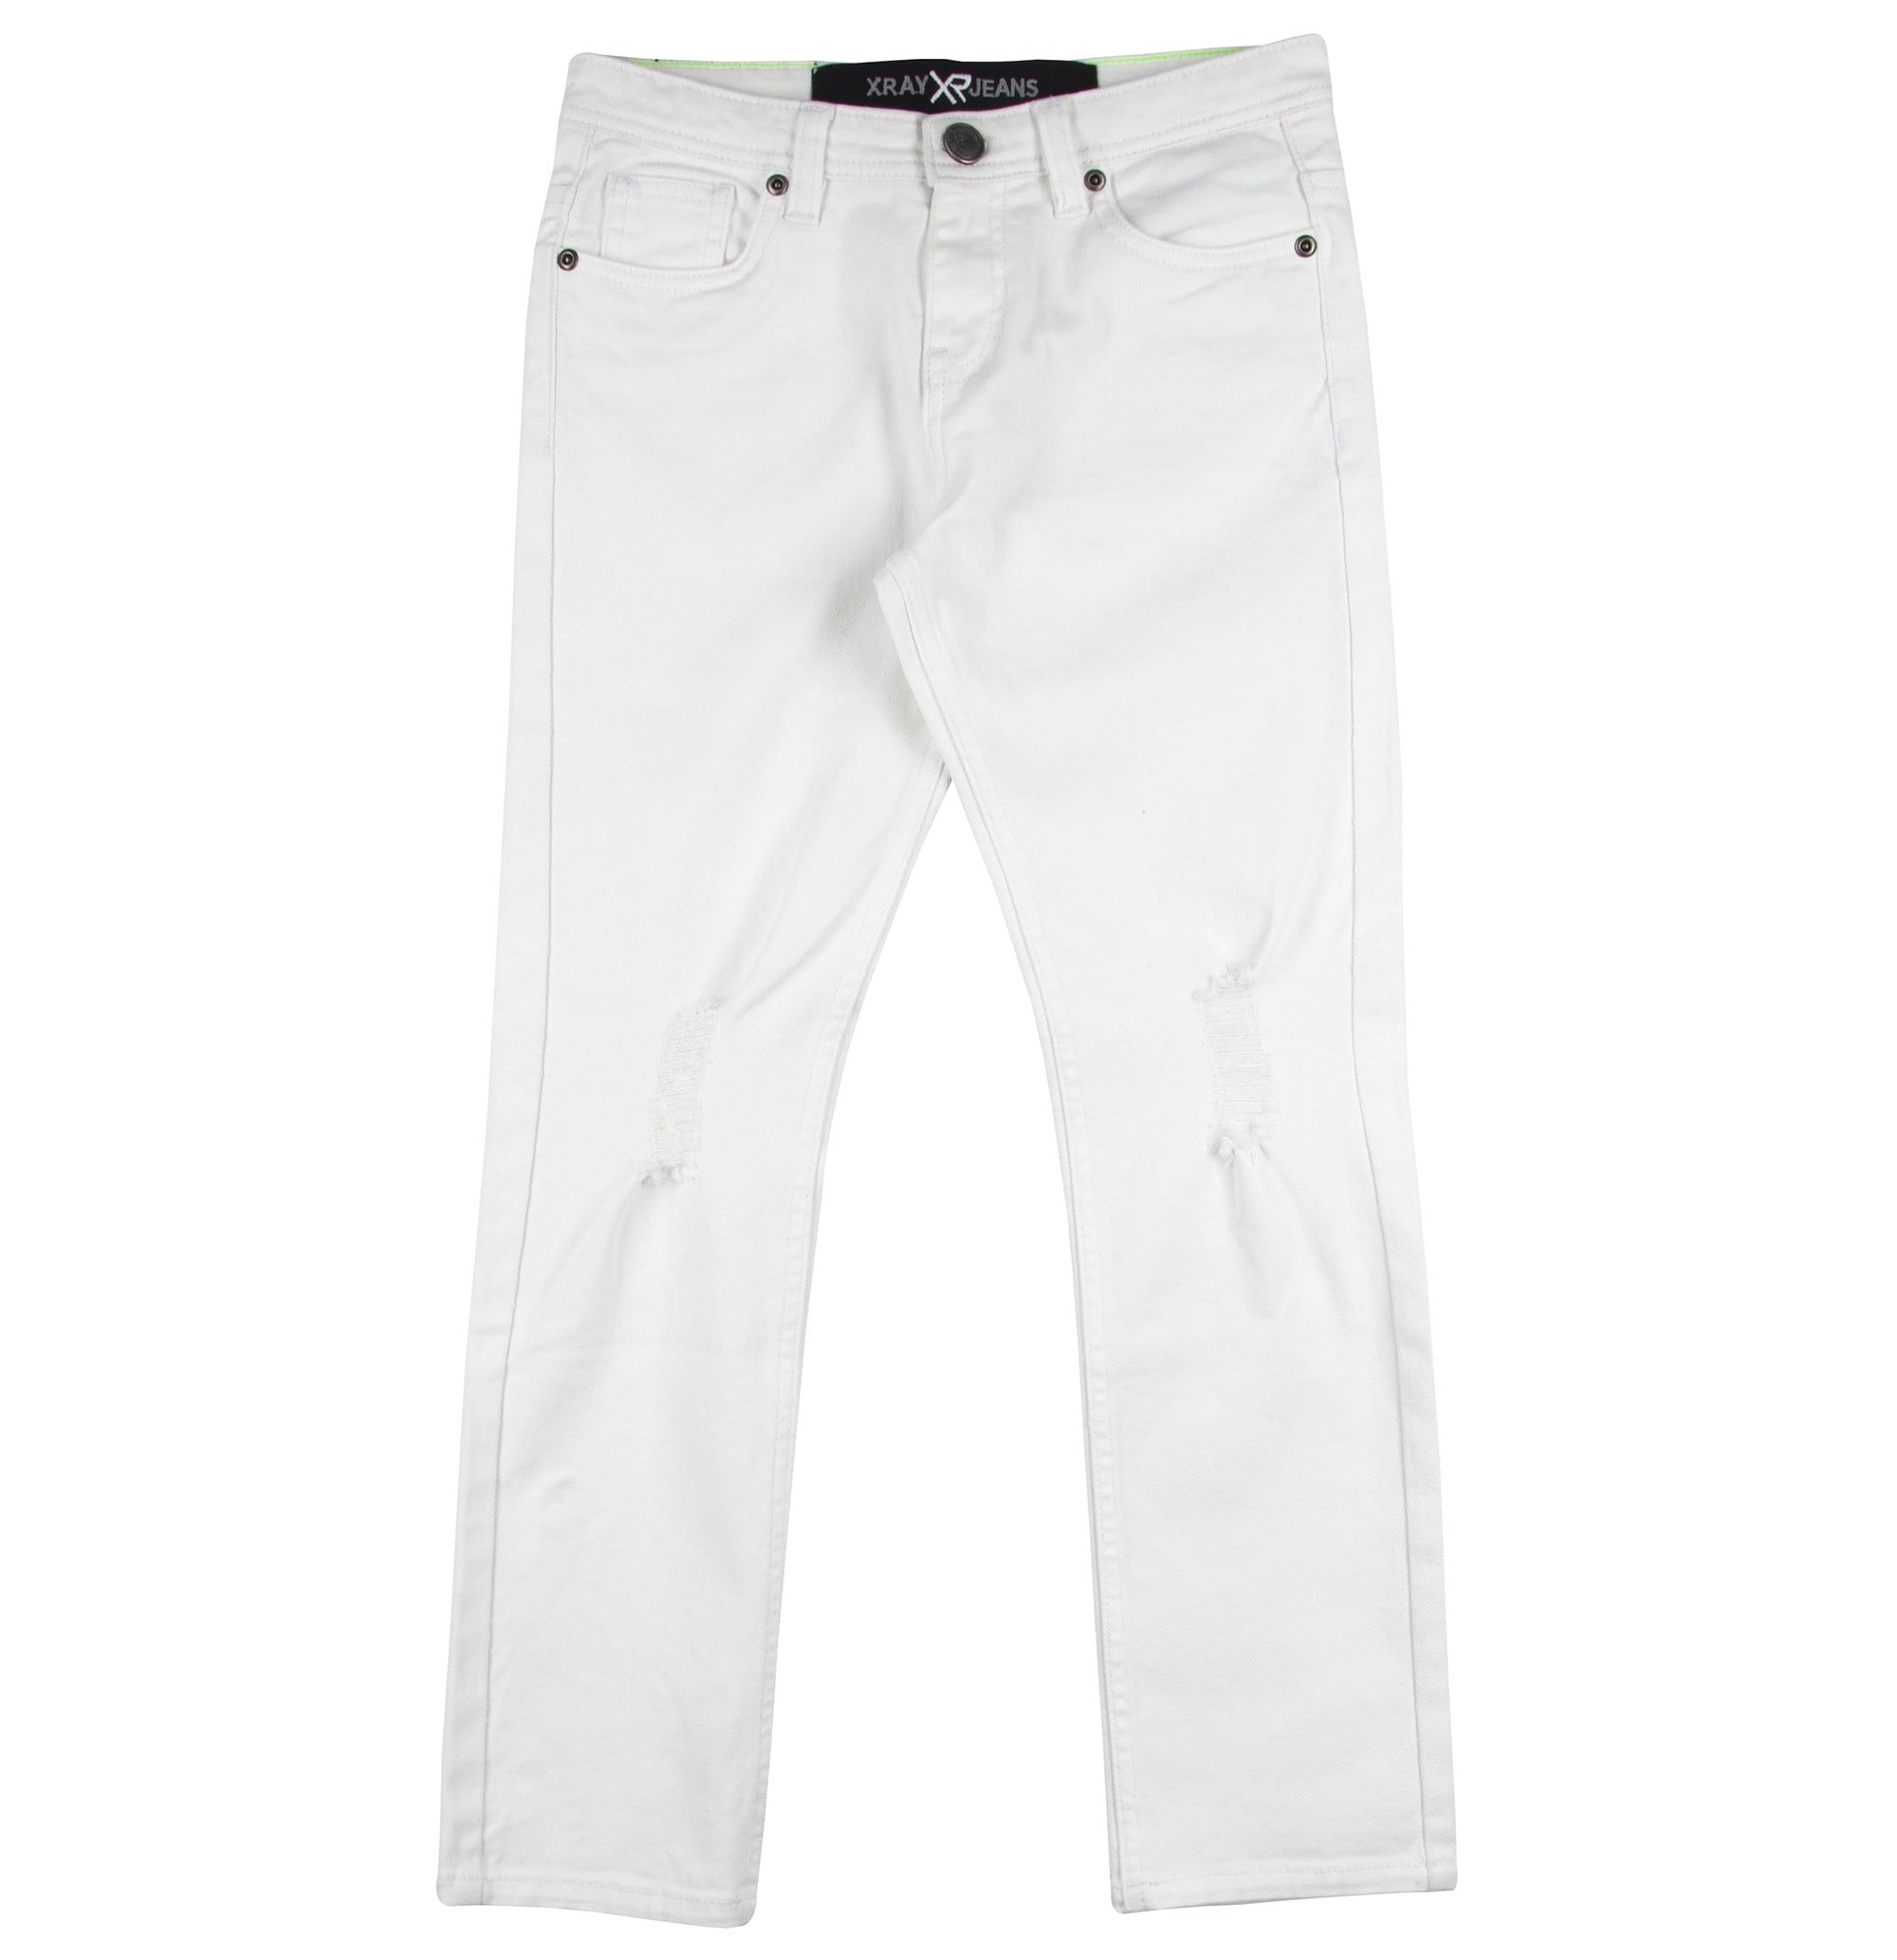 X RAY Skinny Jeans for Boys Slim Fit Denim Pants, White - Knee Rips & Repair, Size 4T | Walmart (US)